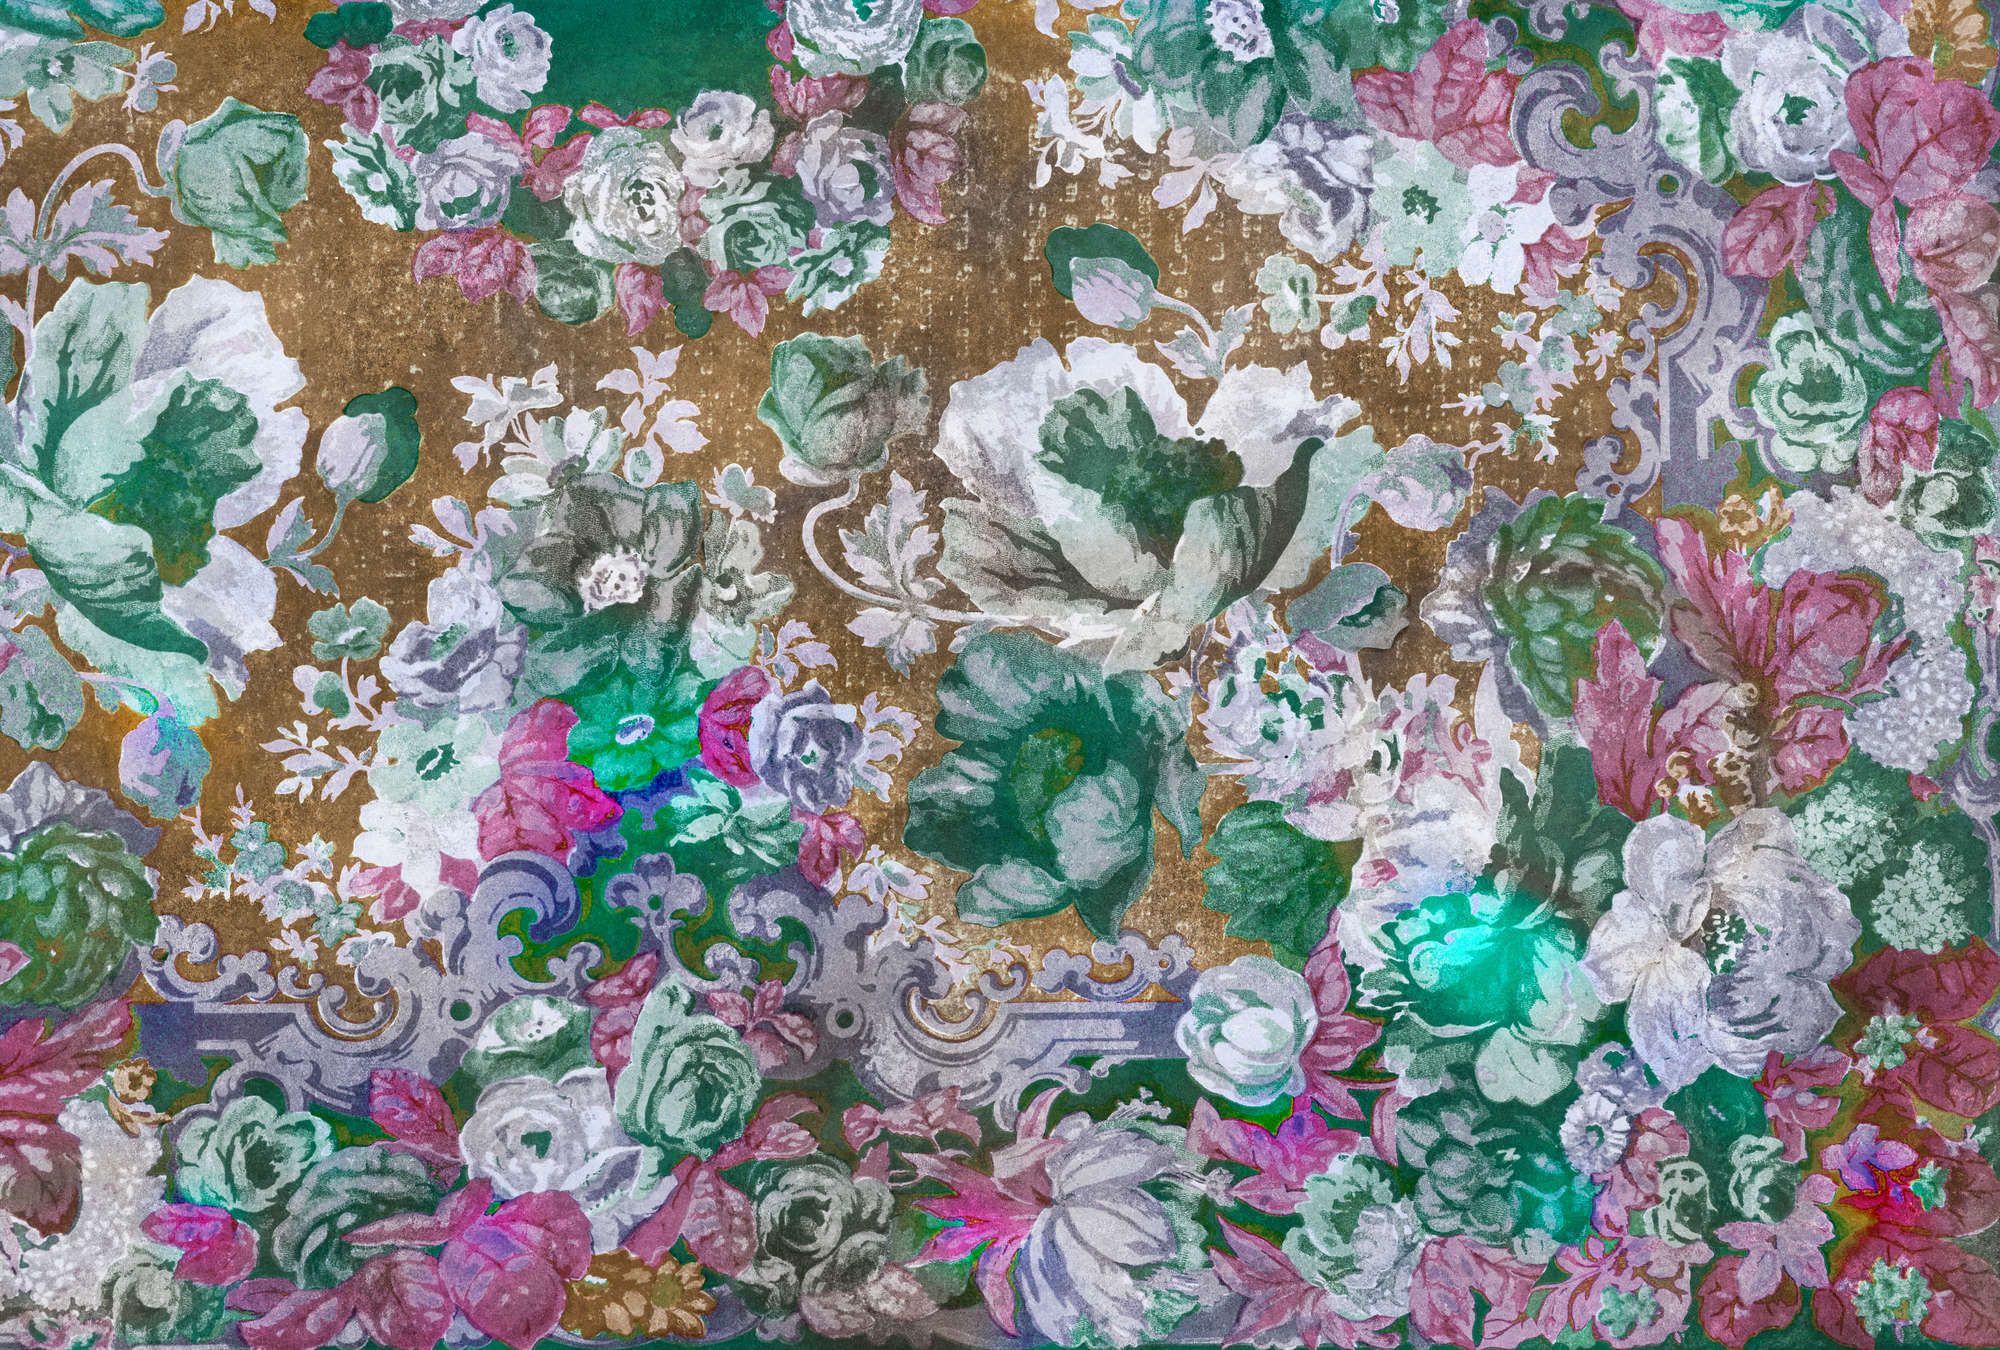             Digital behang »carmente 1« - Klassiek bloemenpatroon tegen een vintage pleistertextuur - Bont | Gladde, licht parelmoerachtige vliesstof
        